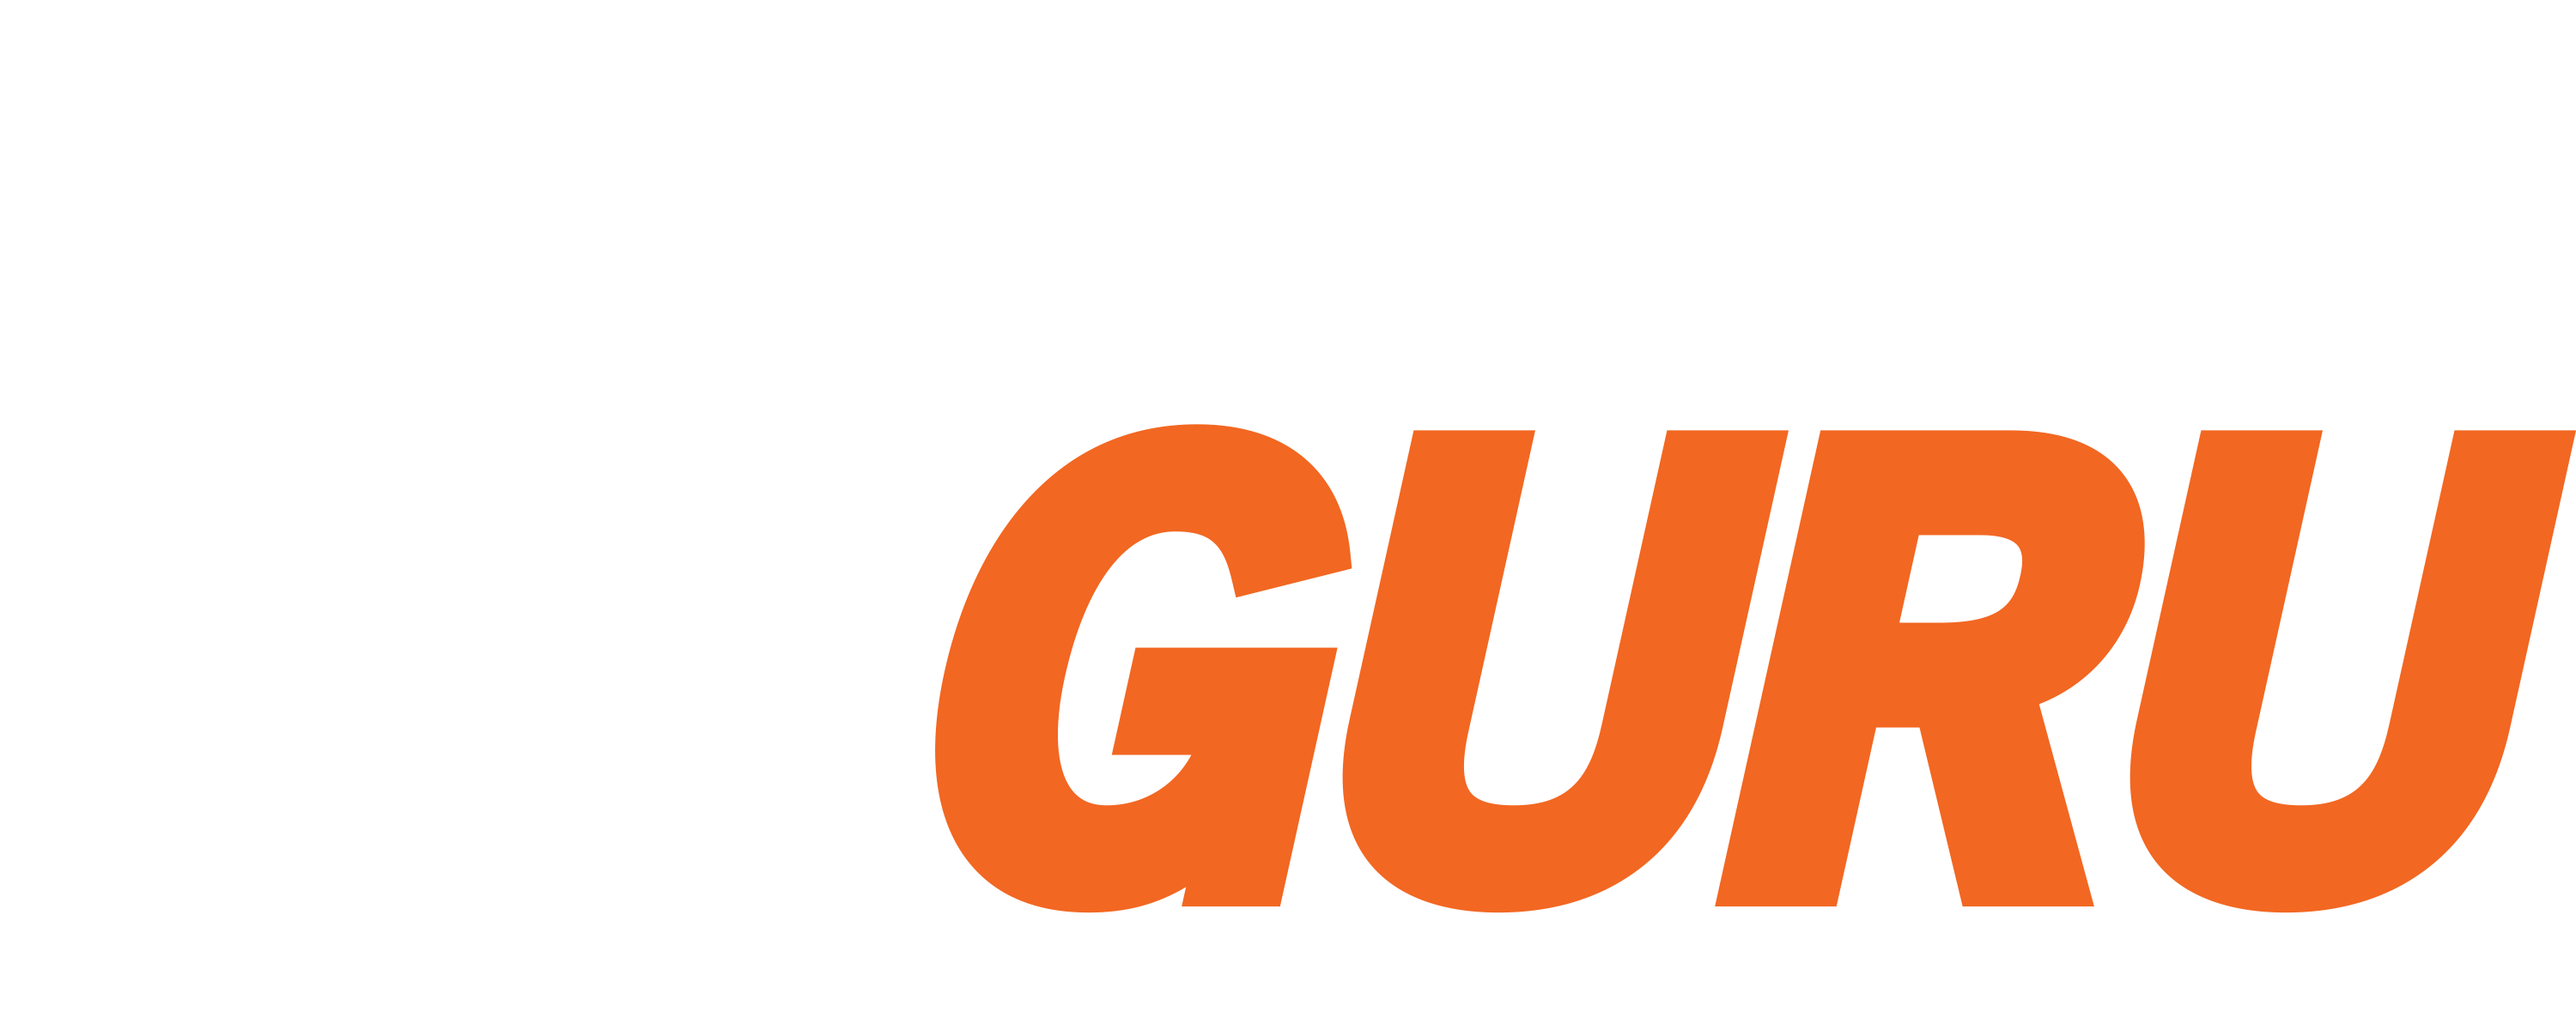 Welcome to Tire Guru